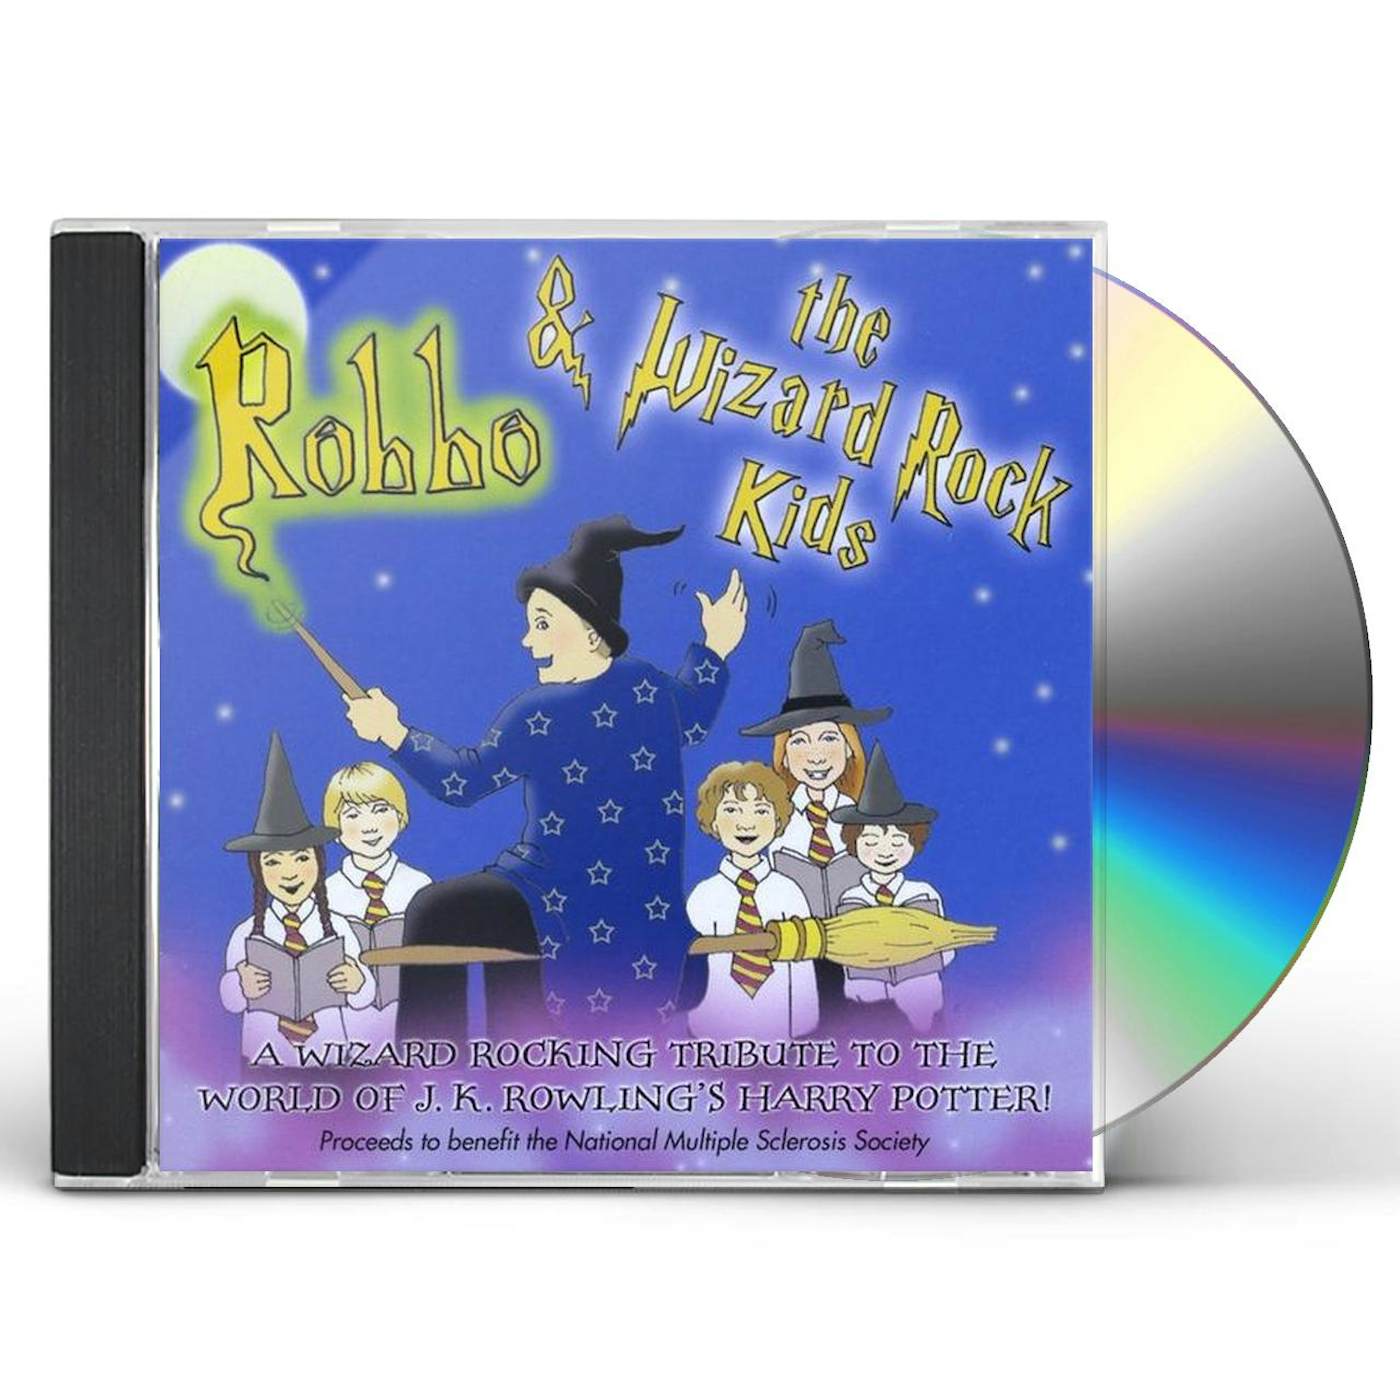 ROBBO & THE WIZARD ROCK KIDS CD